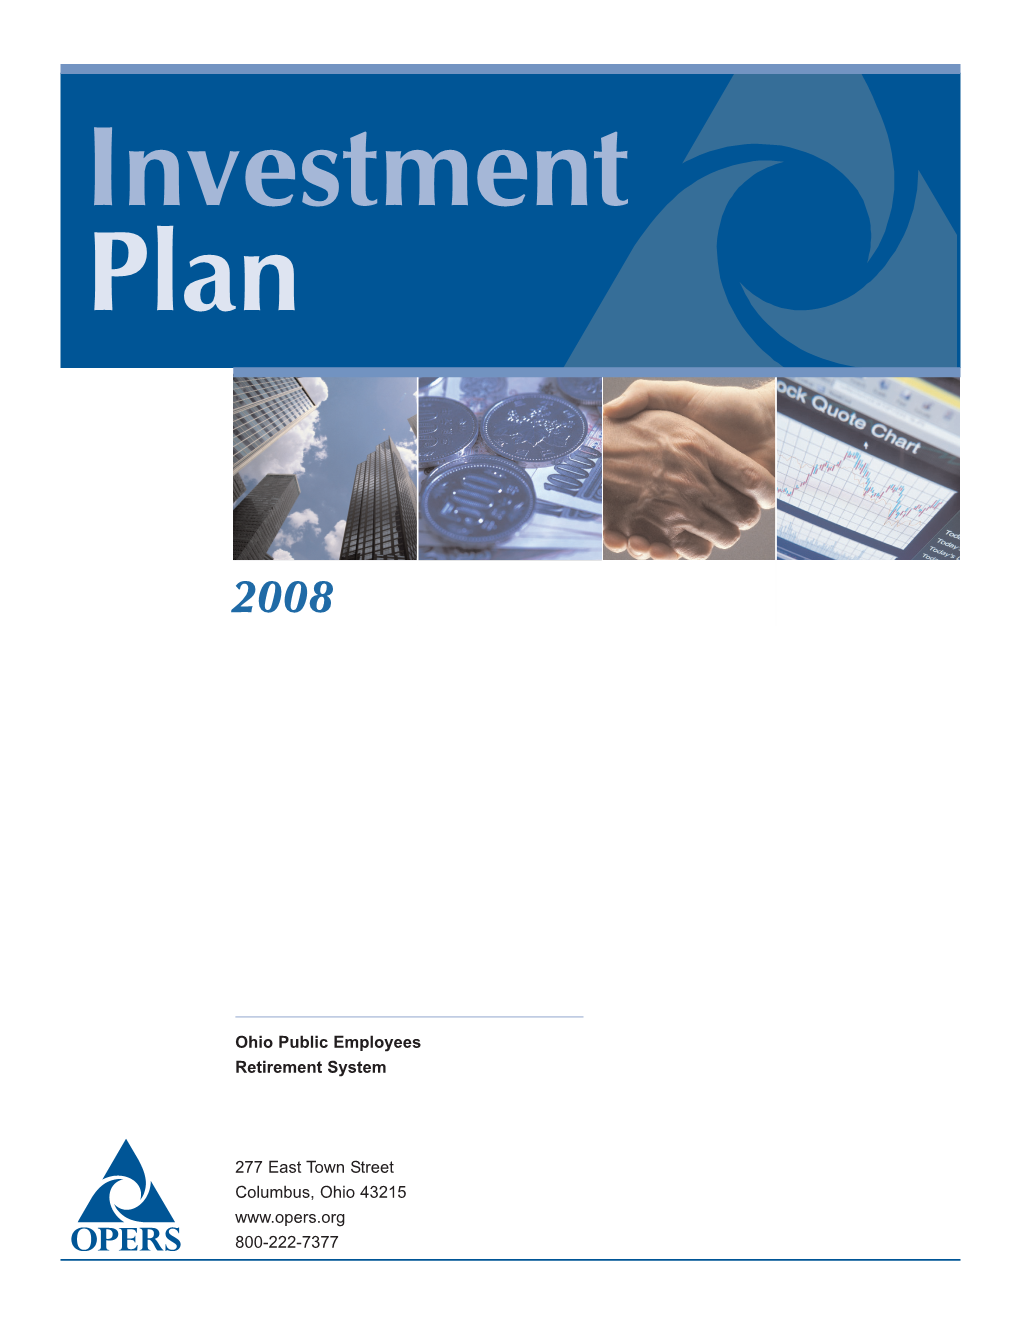 Investment Plan 2008